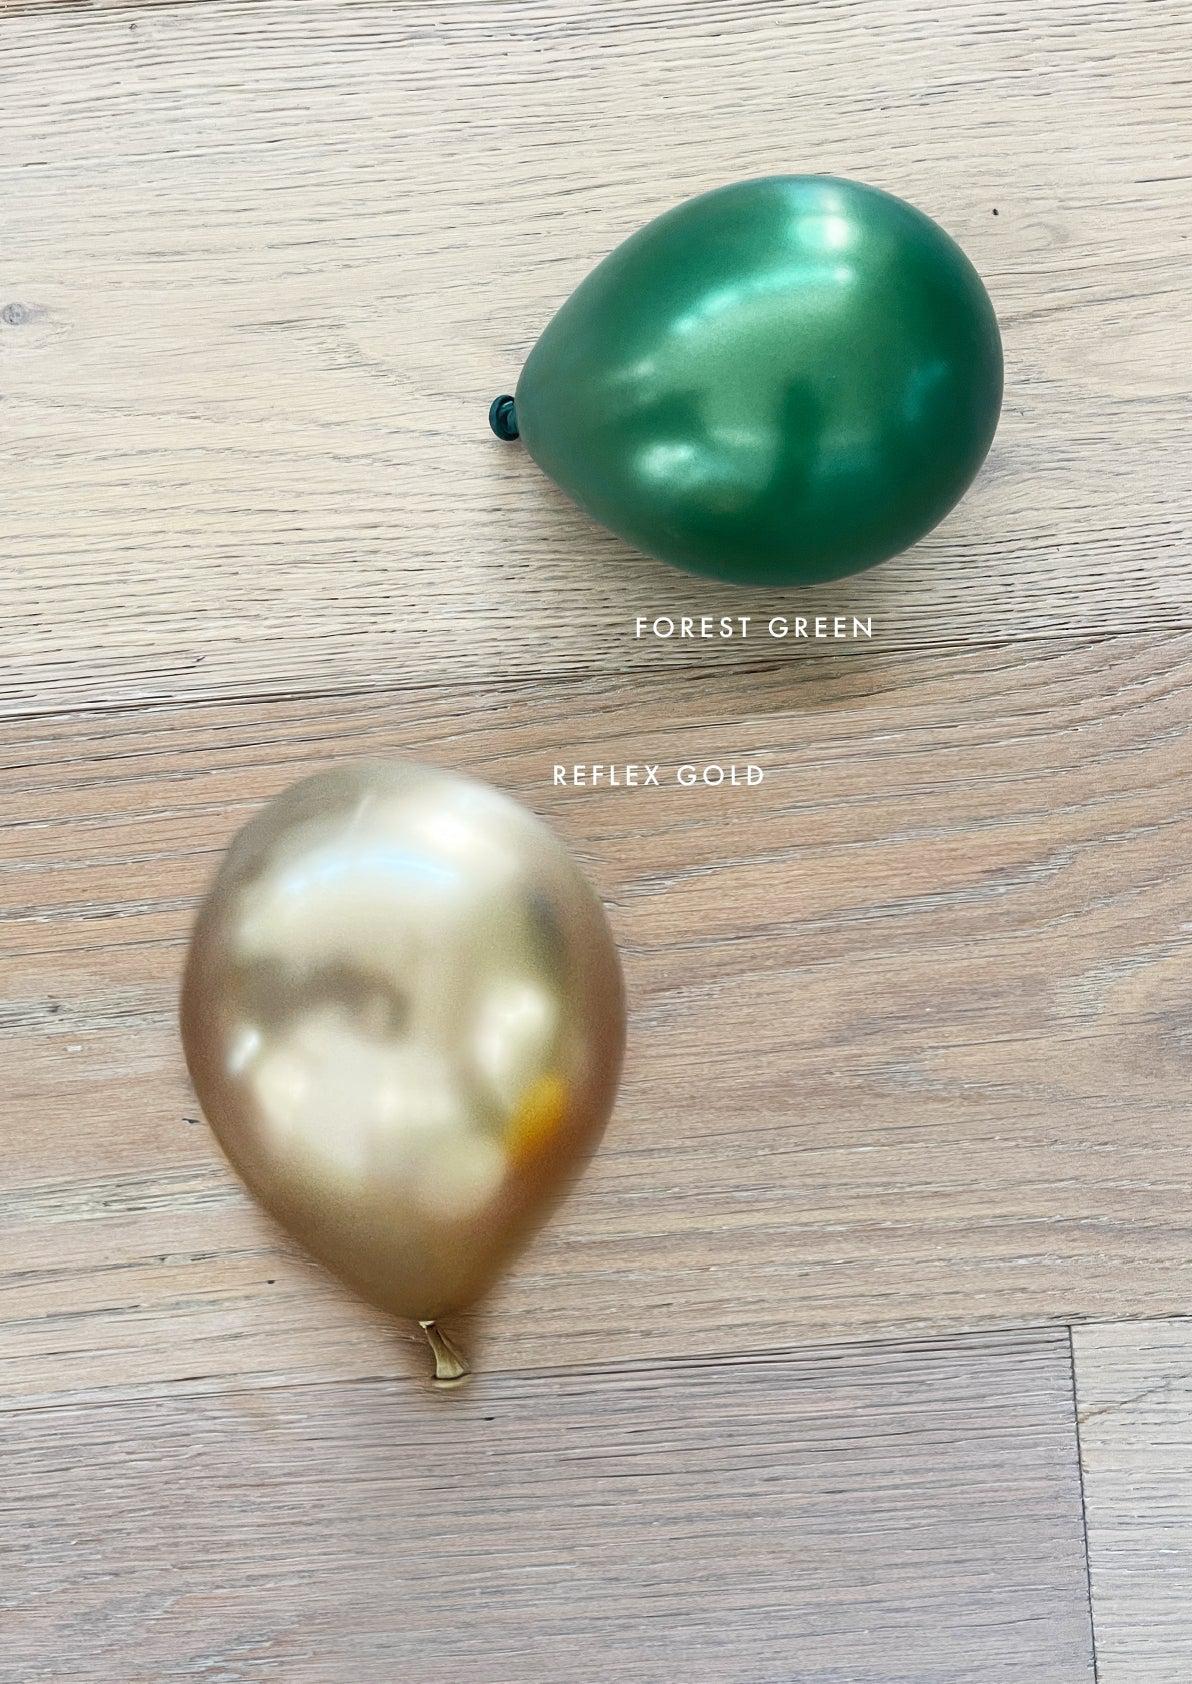 Tuftex Green Metallic Forest Green Latex Balloons Tuftex